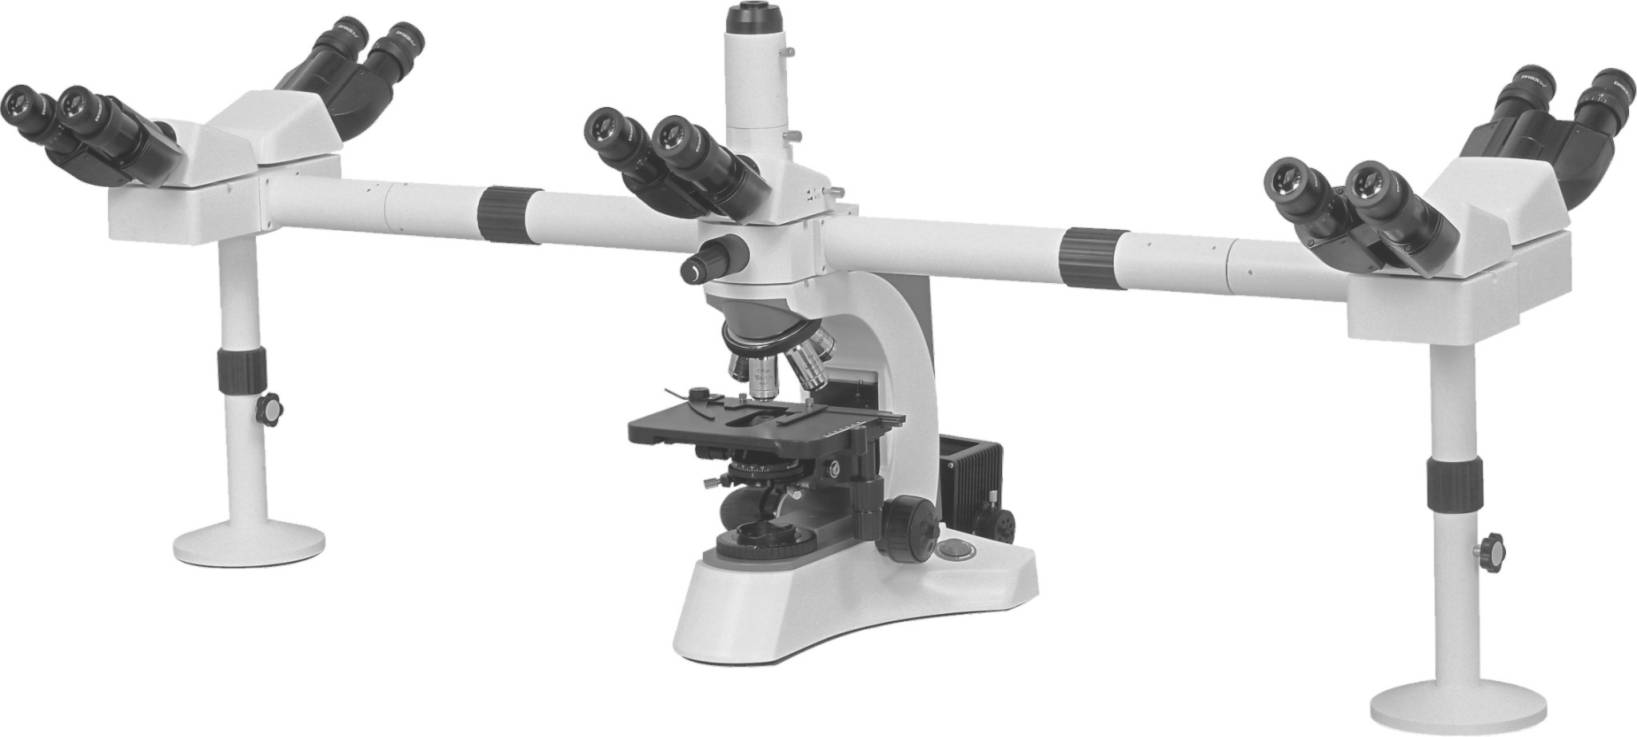  Penta Opto Microscope (Penta Opto-Mikroskop)